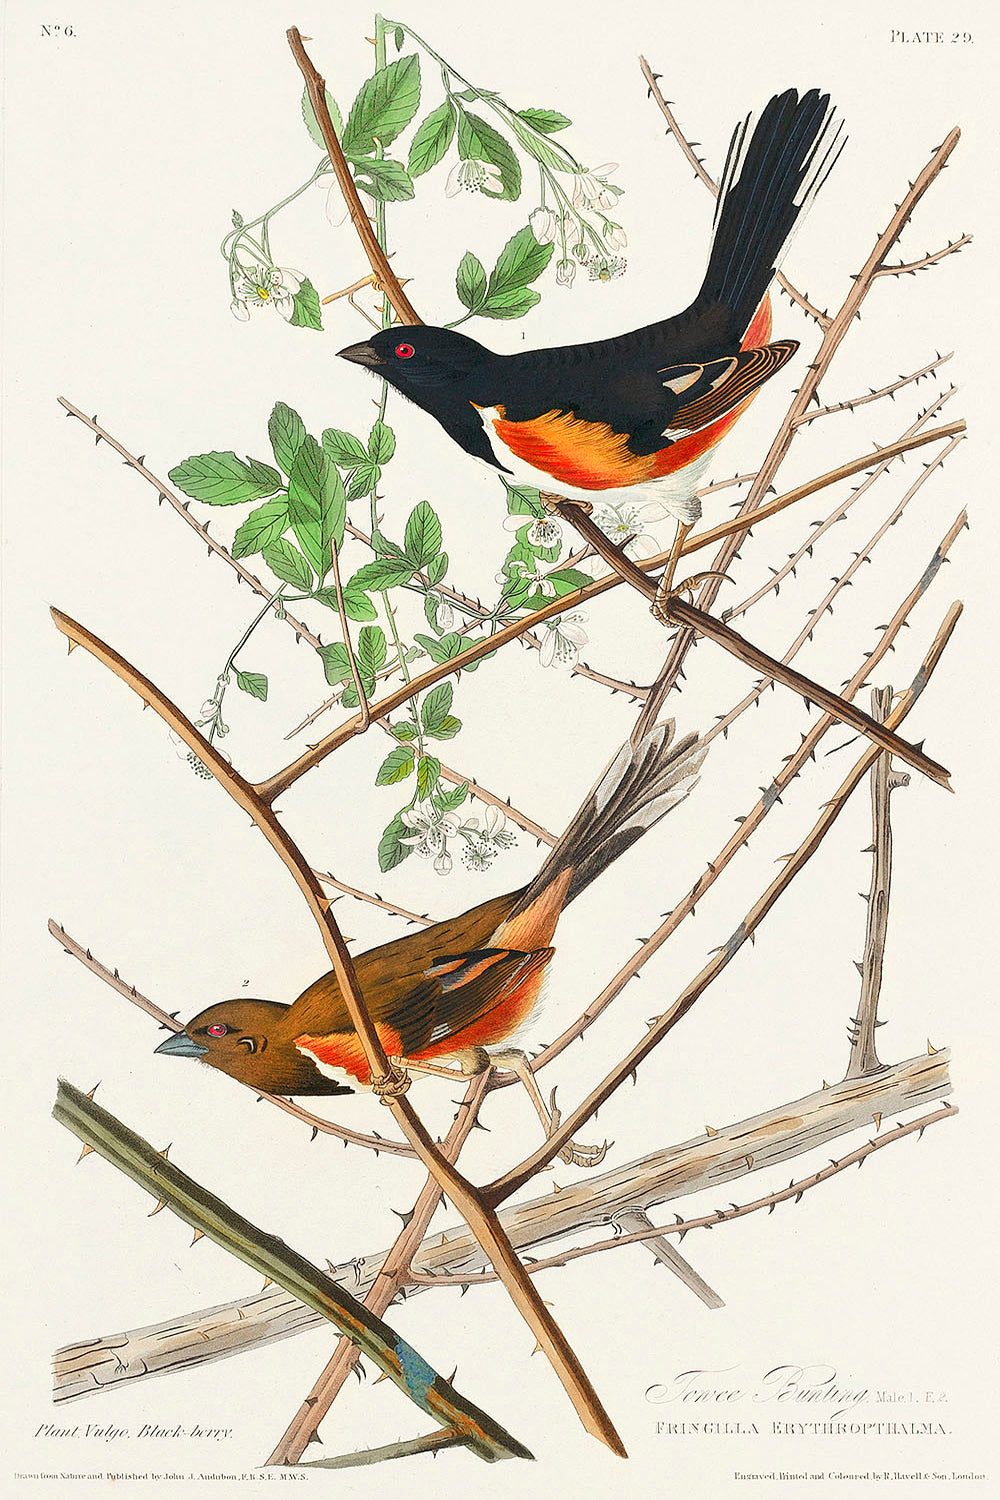 Towee Bunting (1827) by John J. Audubon-WOOD